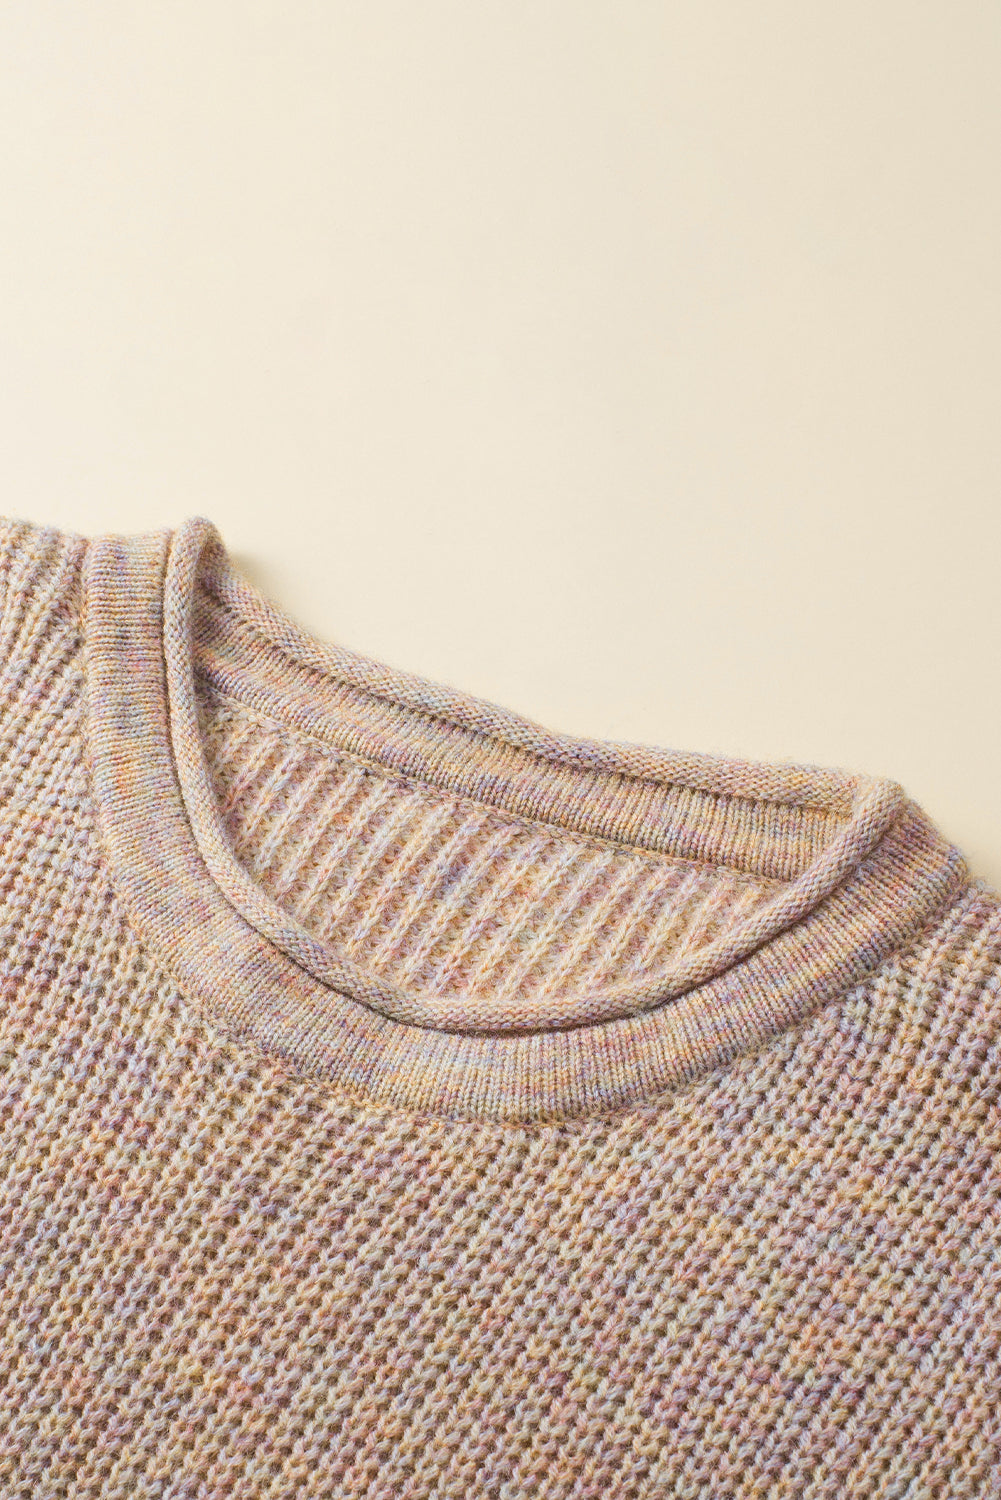 Multicolor Rolled Round Neck Drop Shoulder Sweater